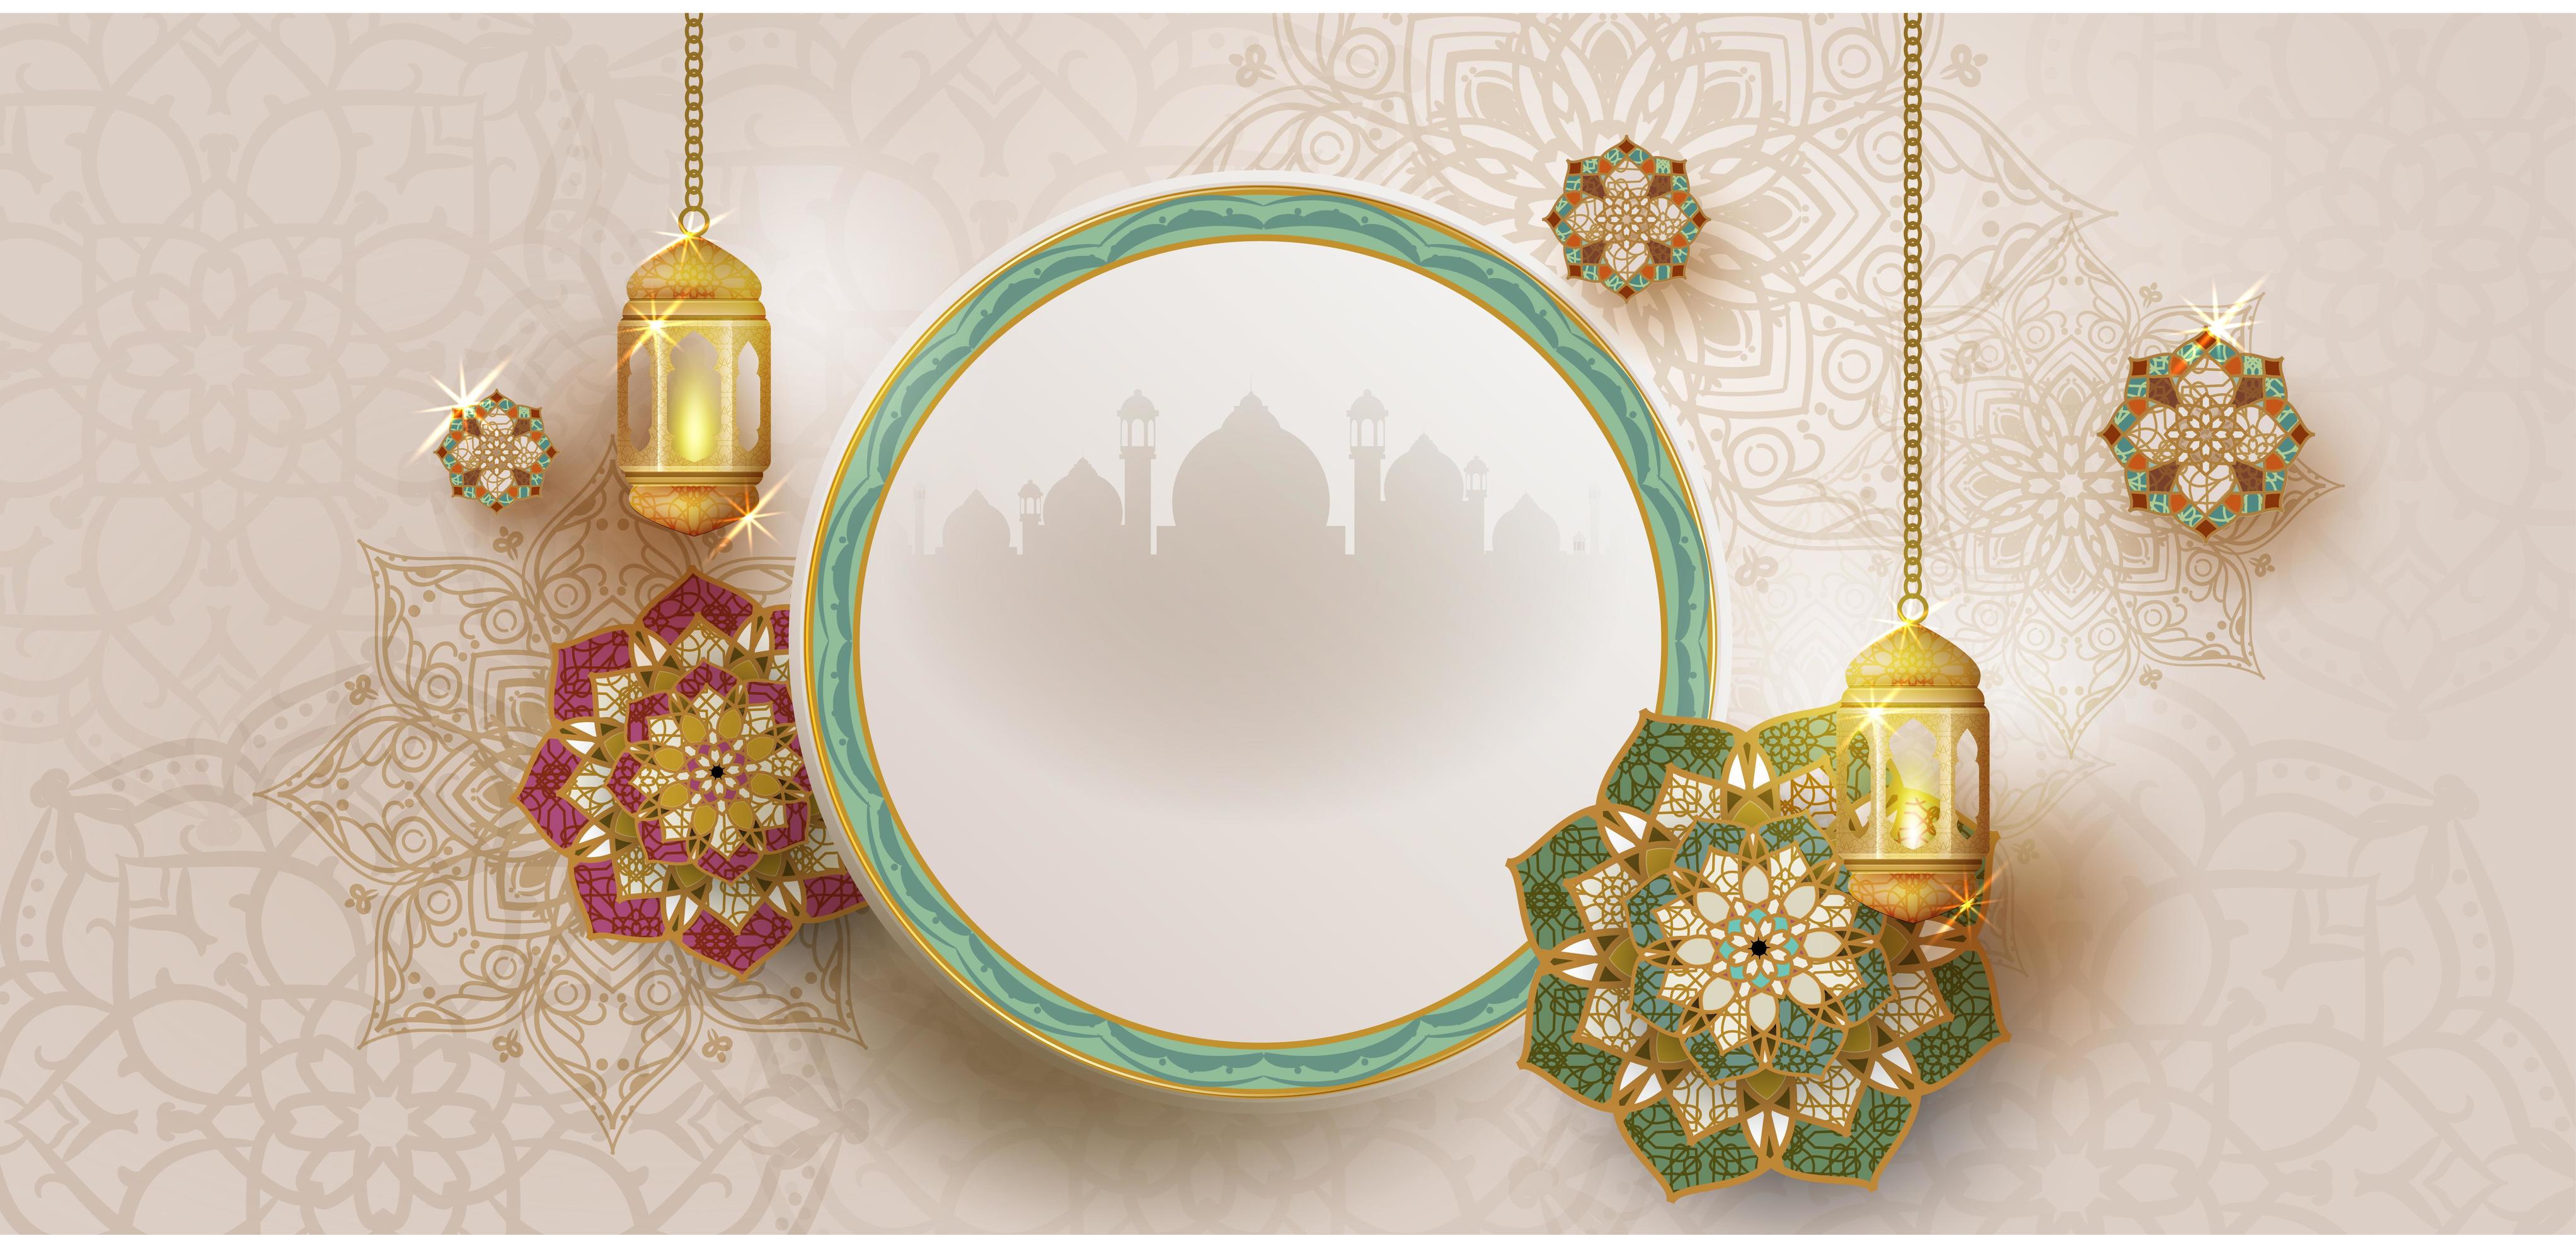 Ramadan kareem Poster with Frame and Hanging Lanterns vector